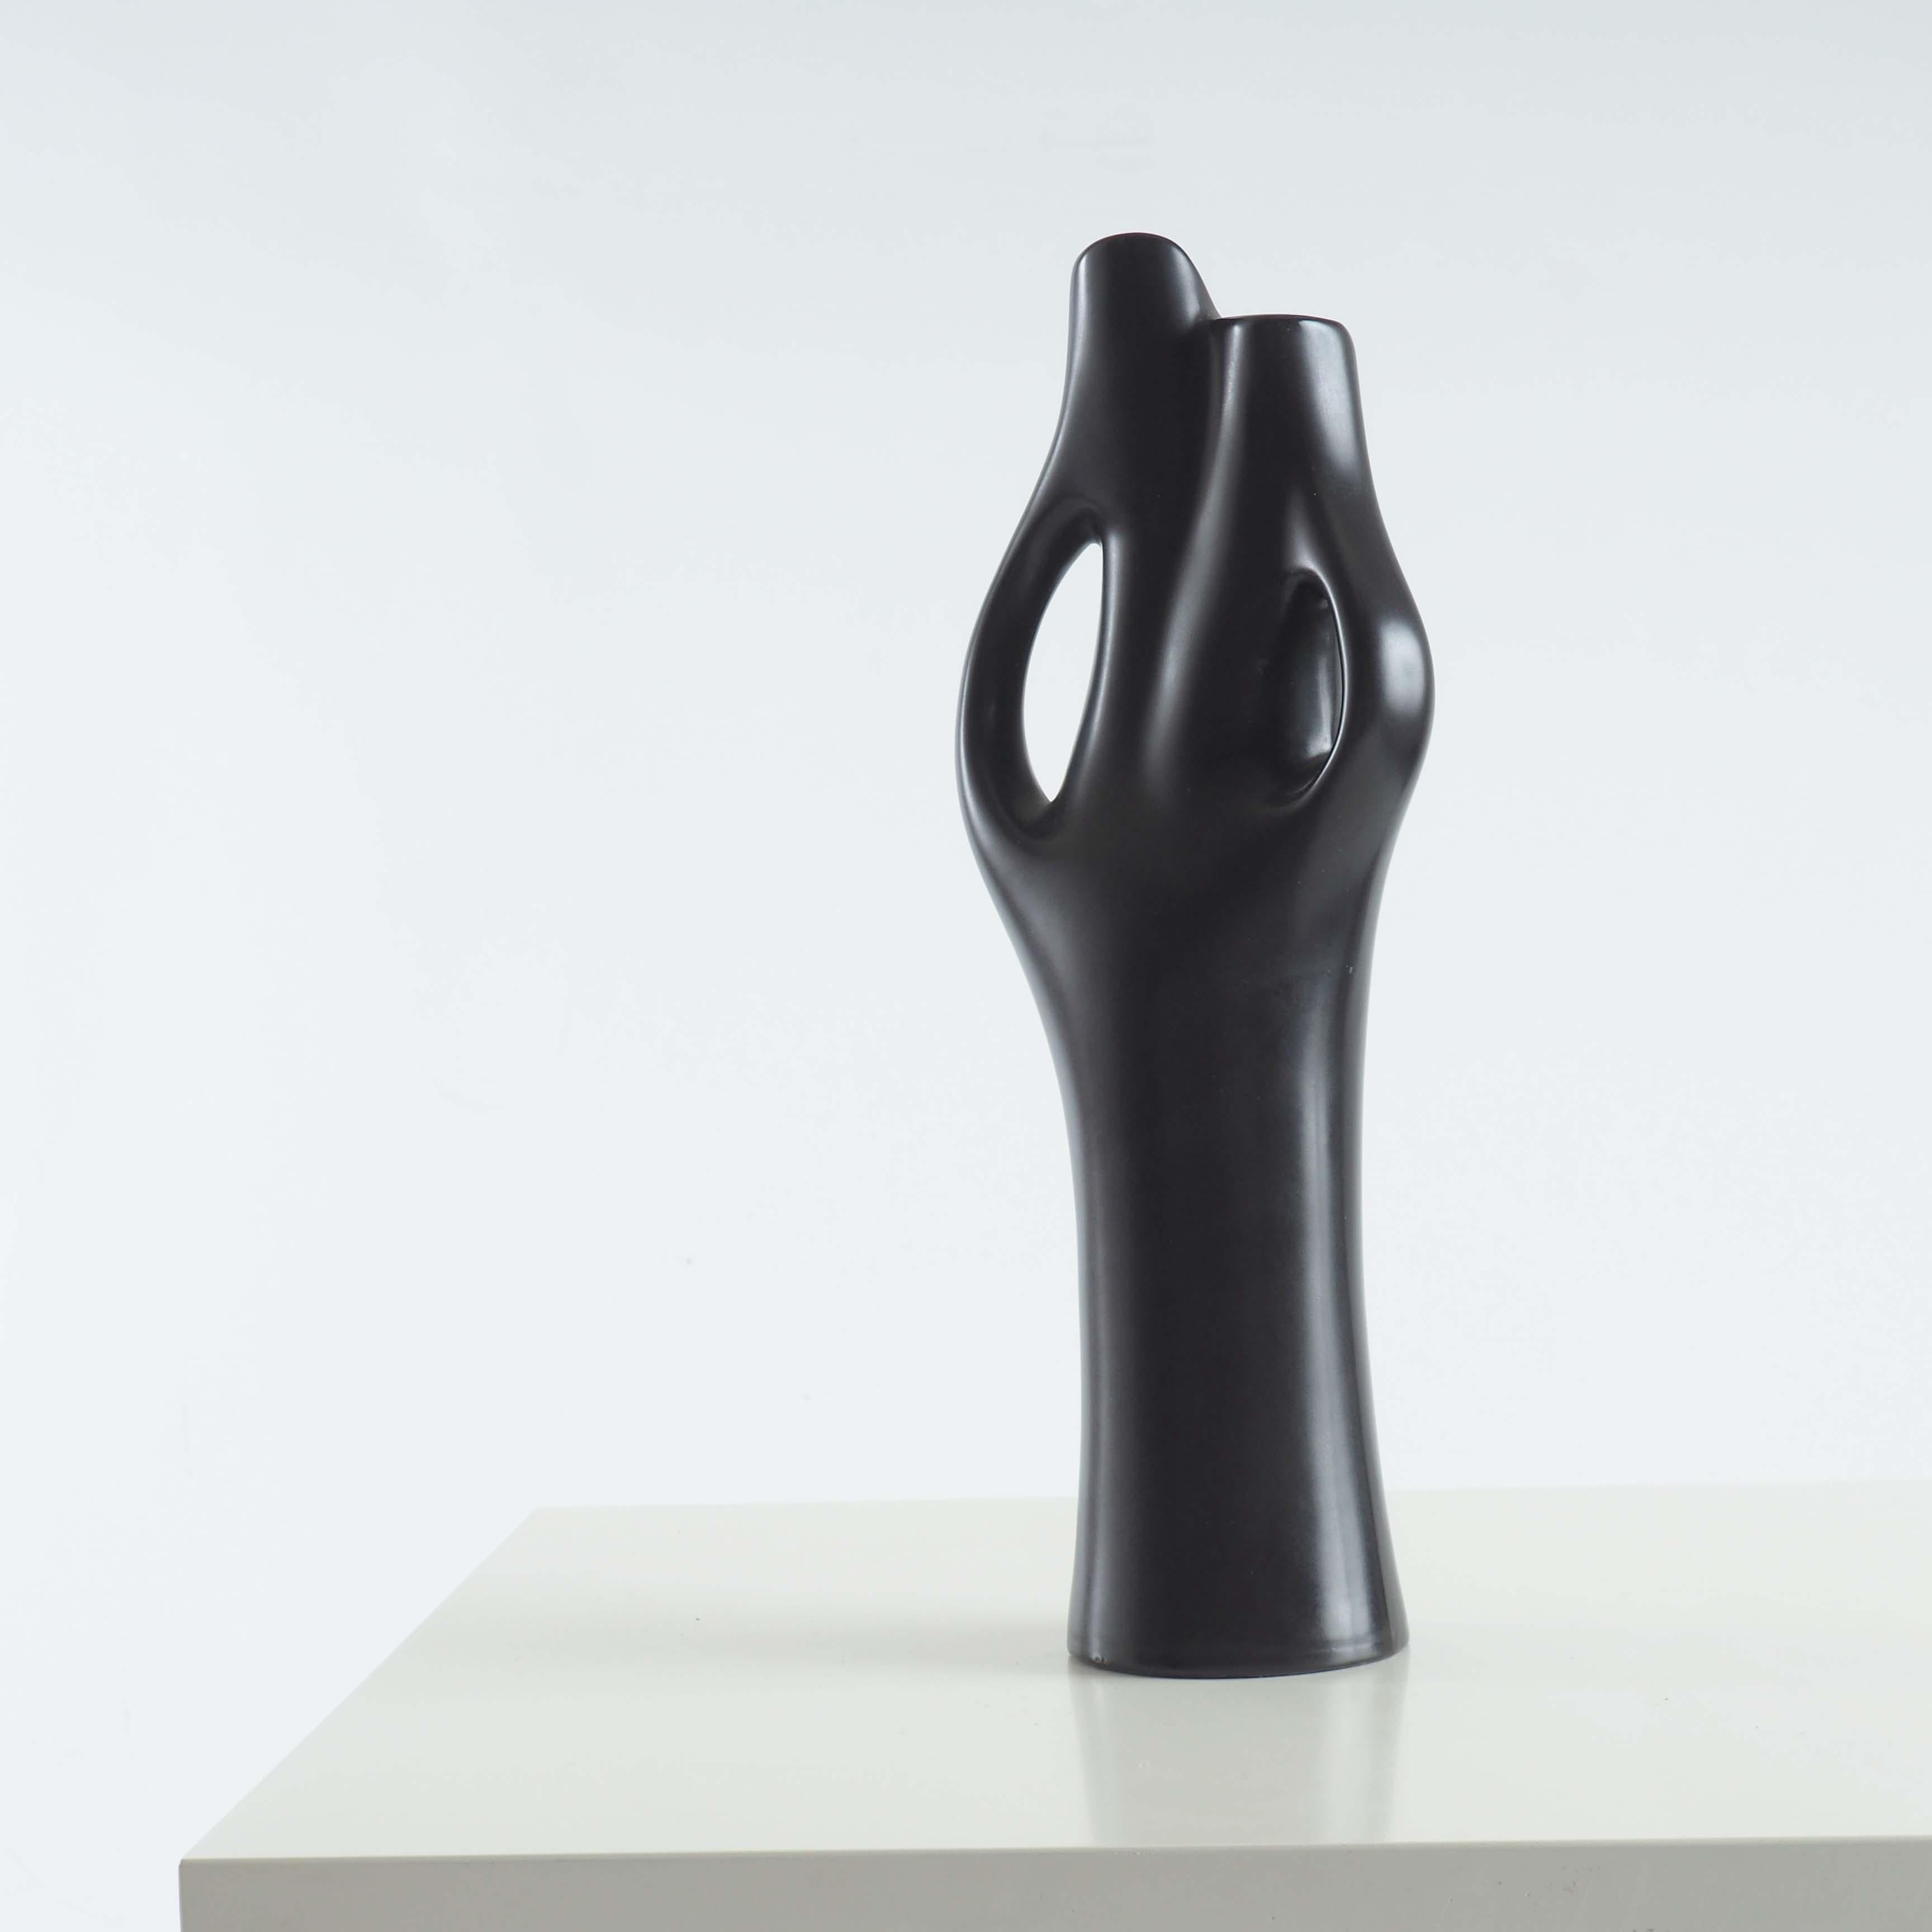 Large Mangania vase by Lillemor Mannerheim for Gefle Porslinsfabrik, Sweden. Beautiful soft body like shapes with a matte black glaze.

 